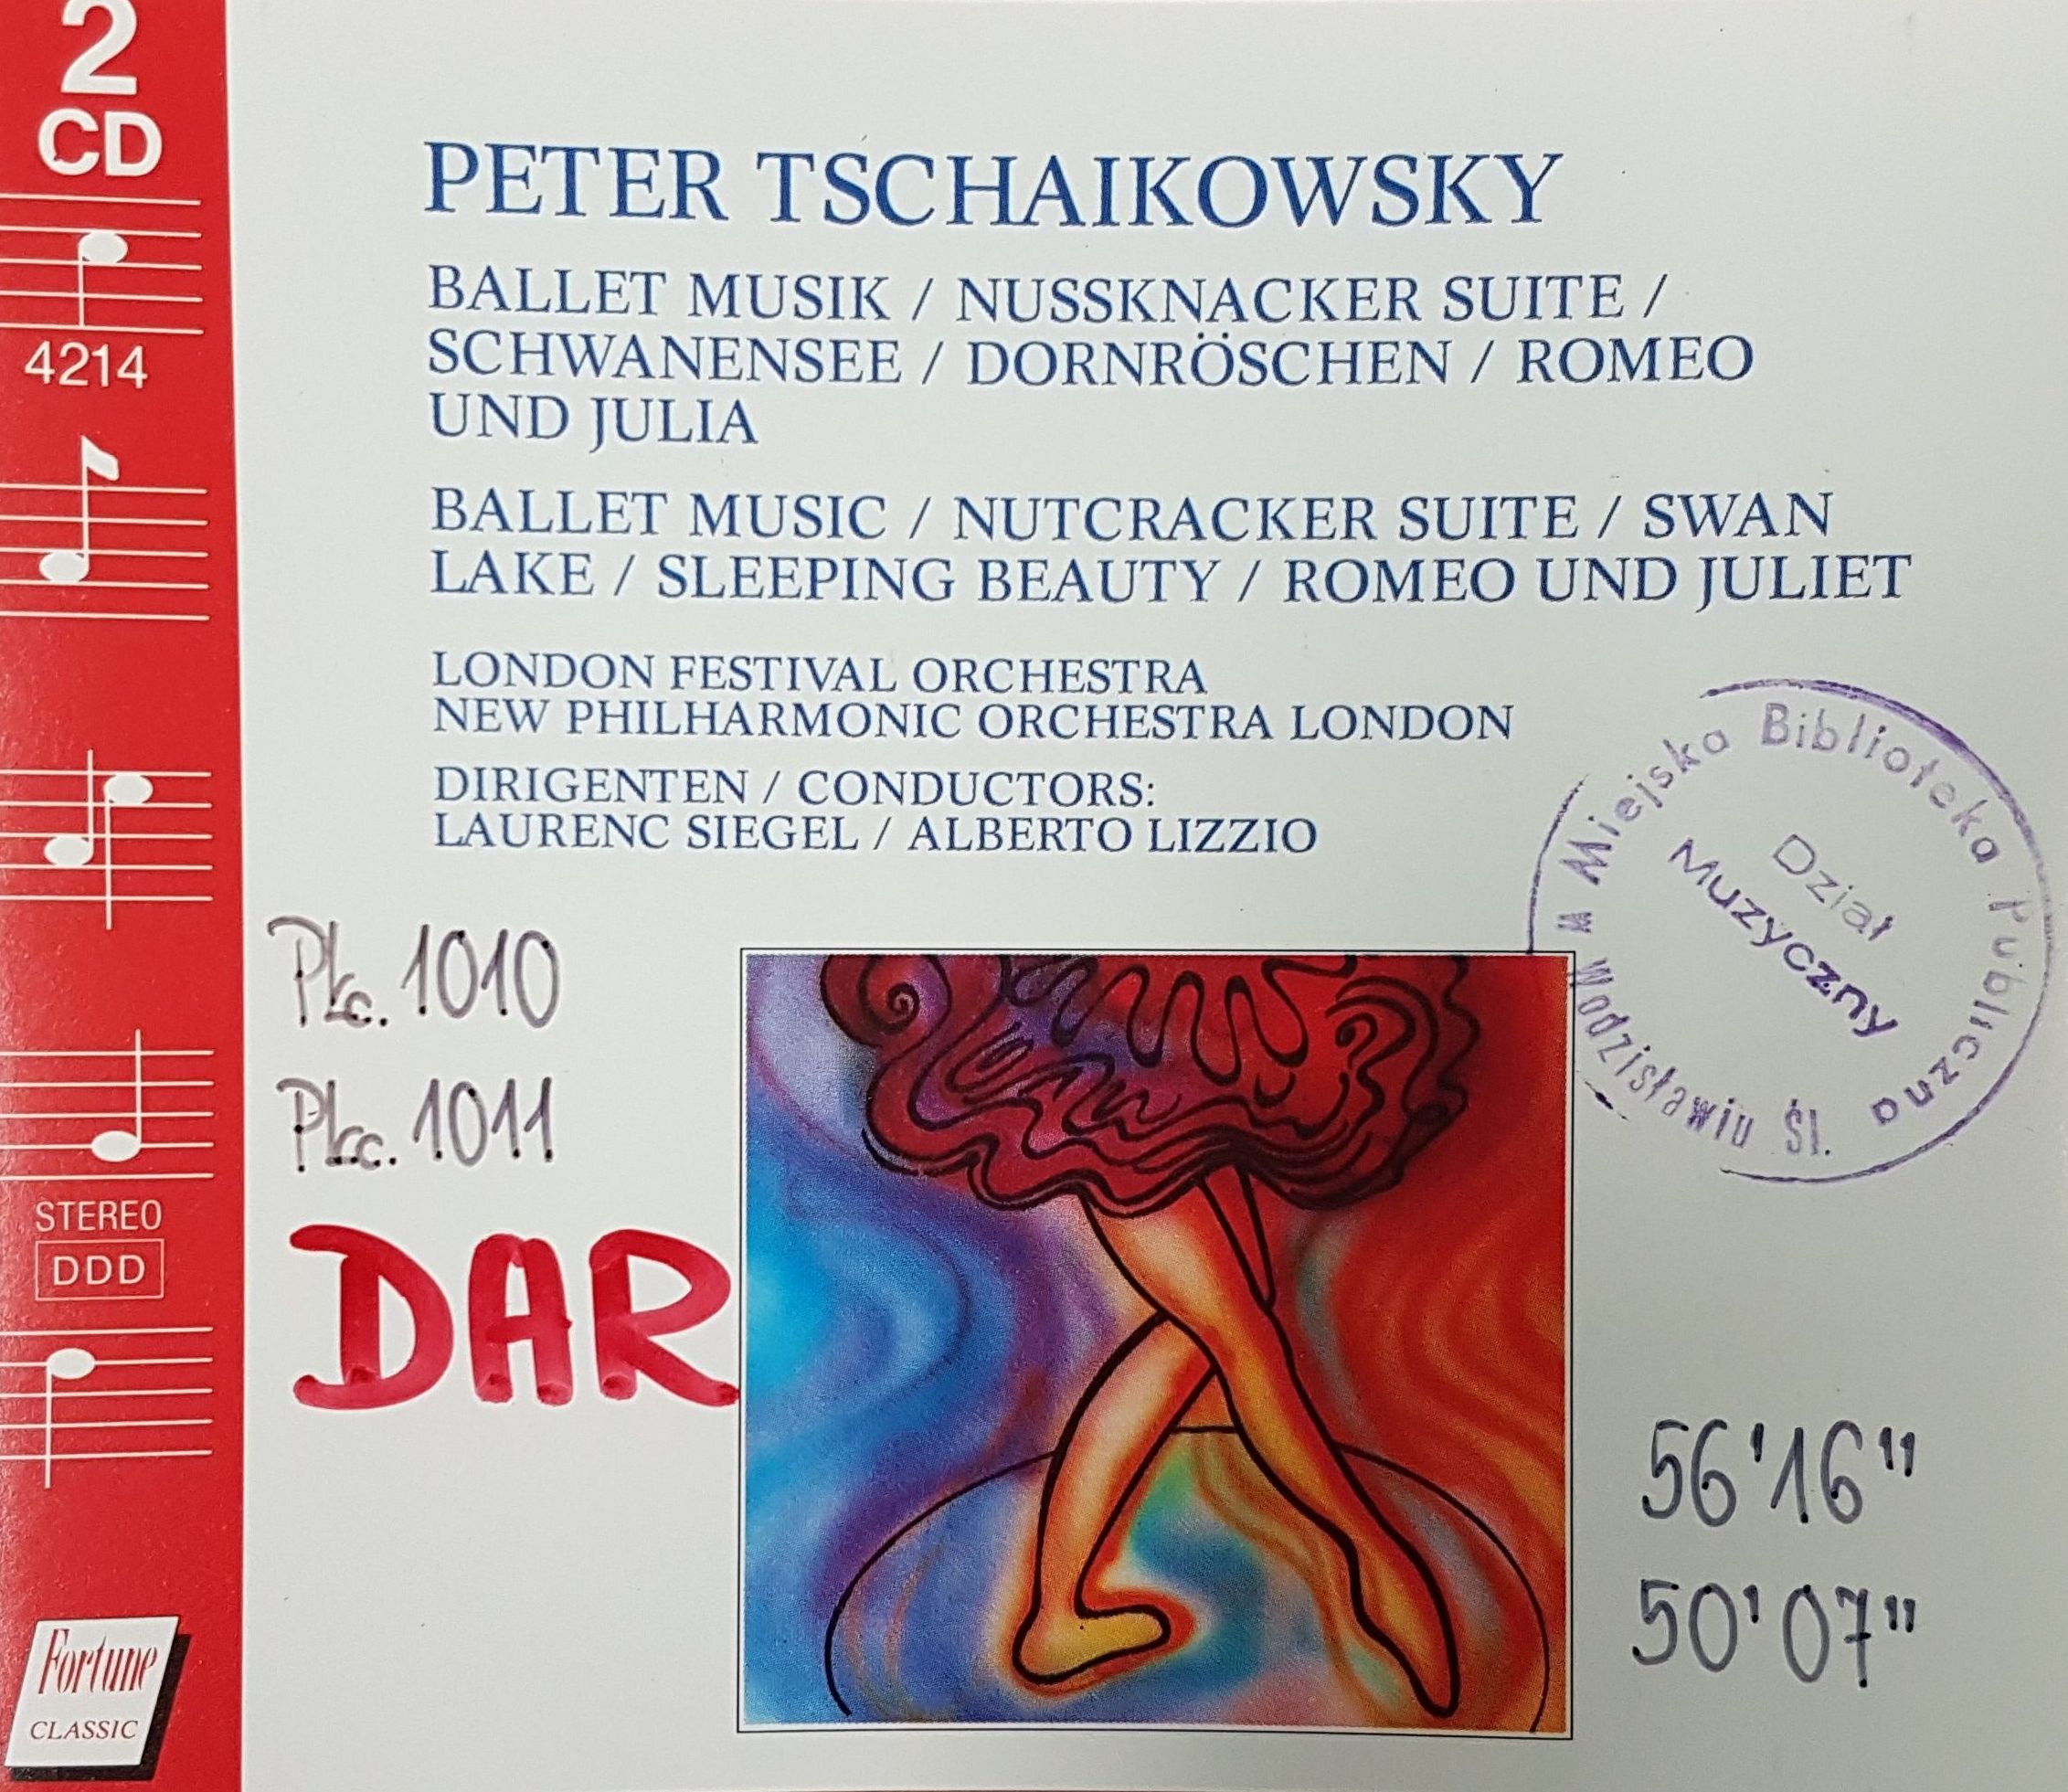 CZAJKOWSKI PIOTR – Ballet Music, Nutcracker Suite, Swan Lake, Sleeping Beauty, Romeo And Juliet